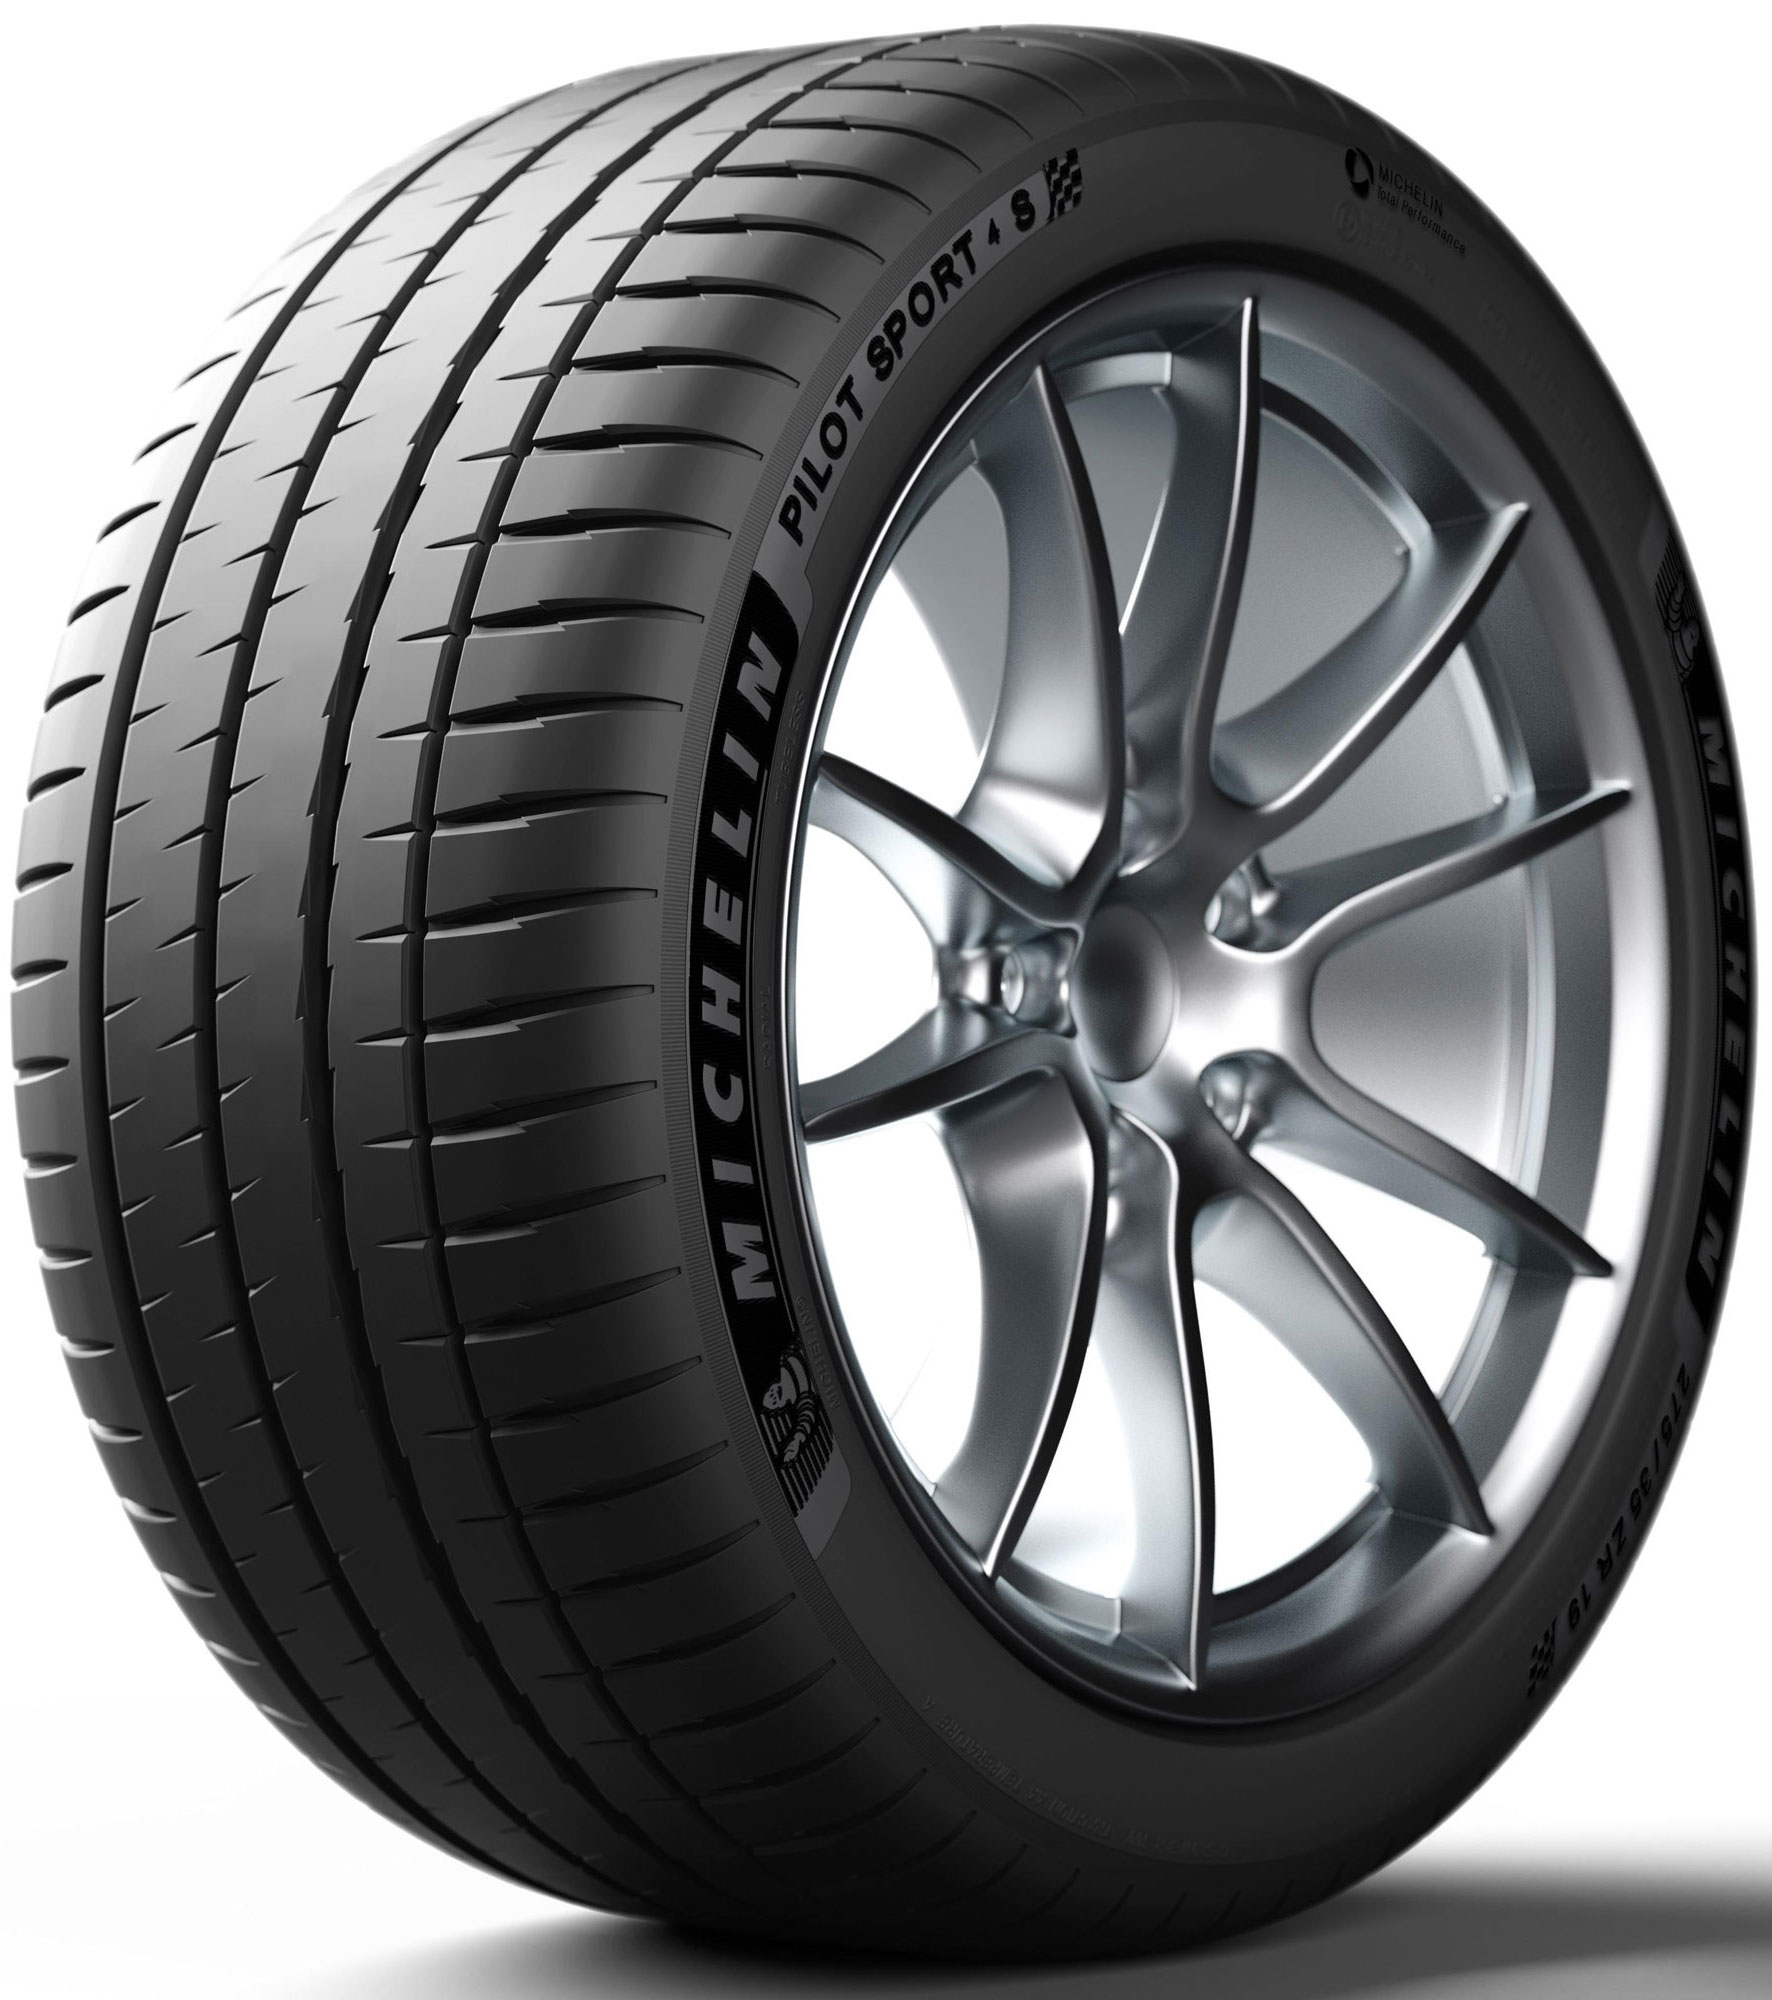 Comparison of nitrogen versus air in your tires | TireBuyer.com